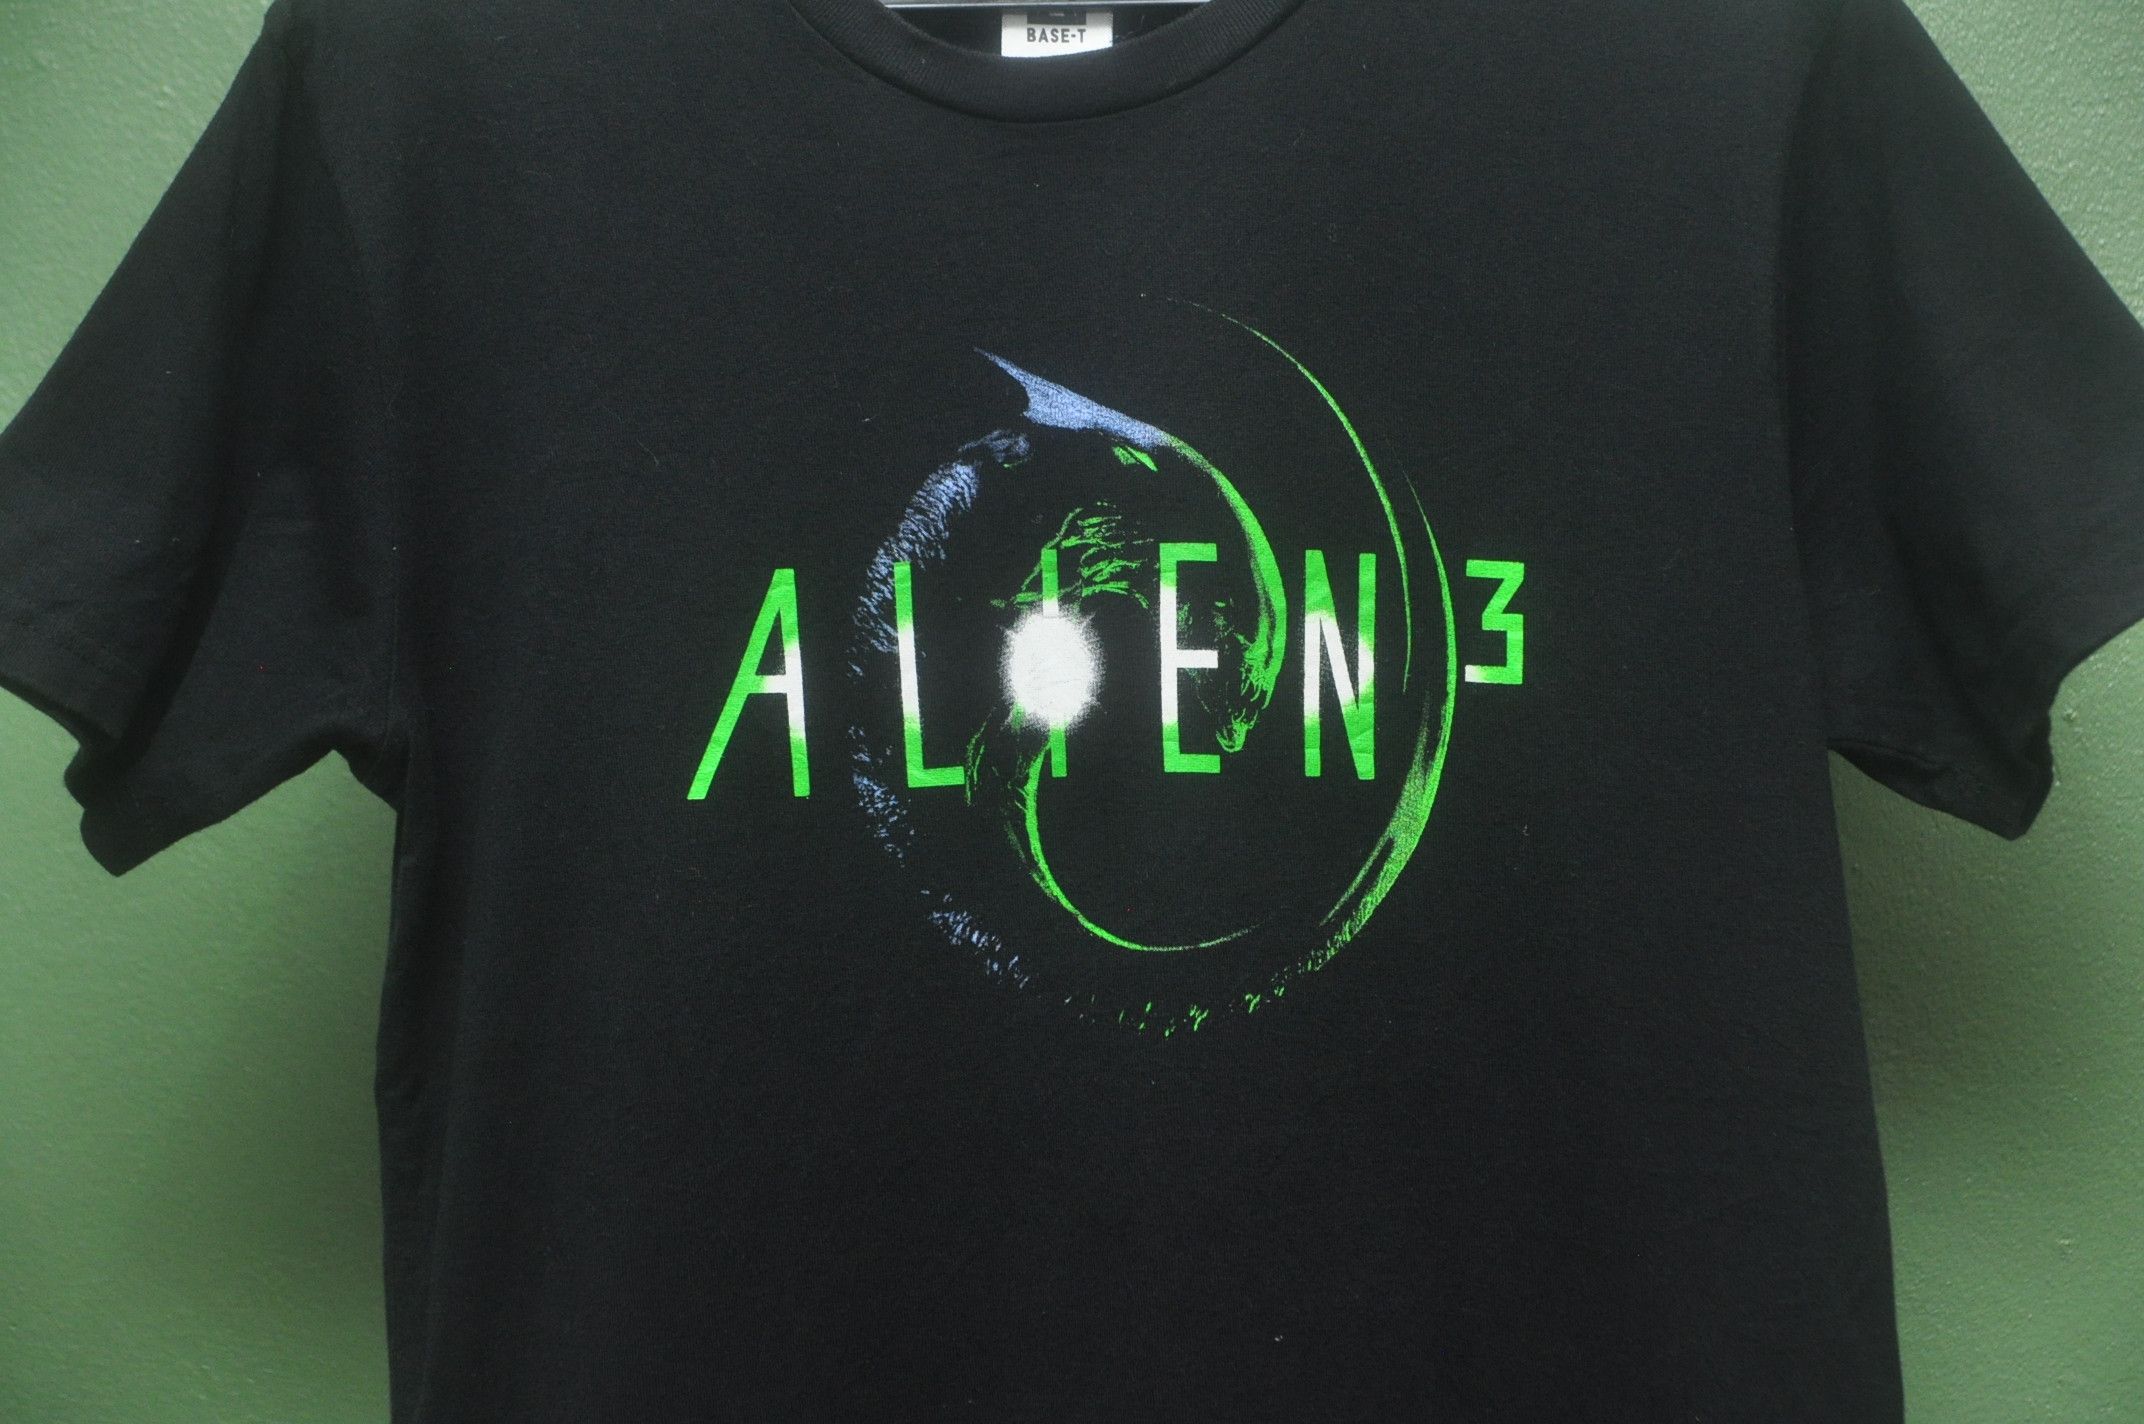 Movie Vintage Alien 3 90s Movies Big Logo Shirt Size US M / EU 48-50 / 2 - 3 Thumbnail